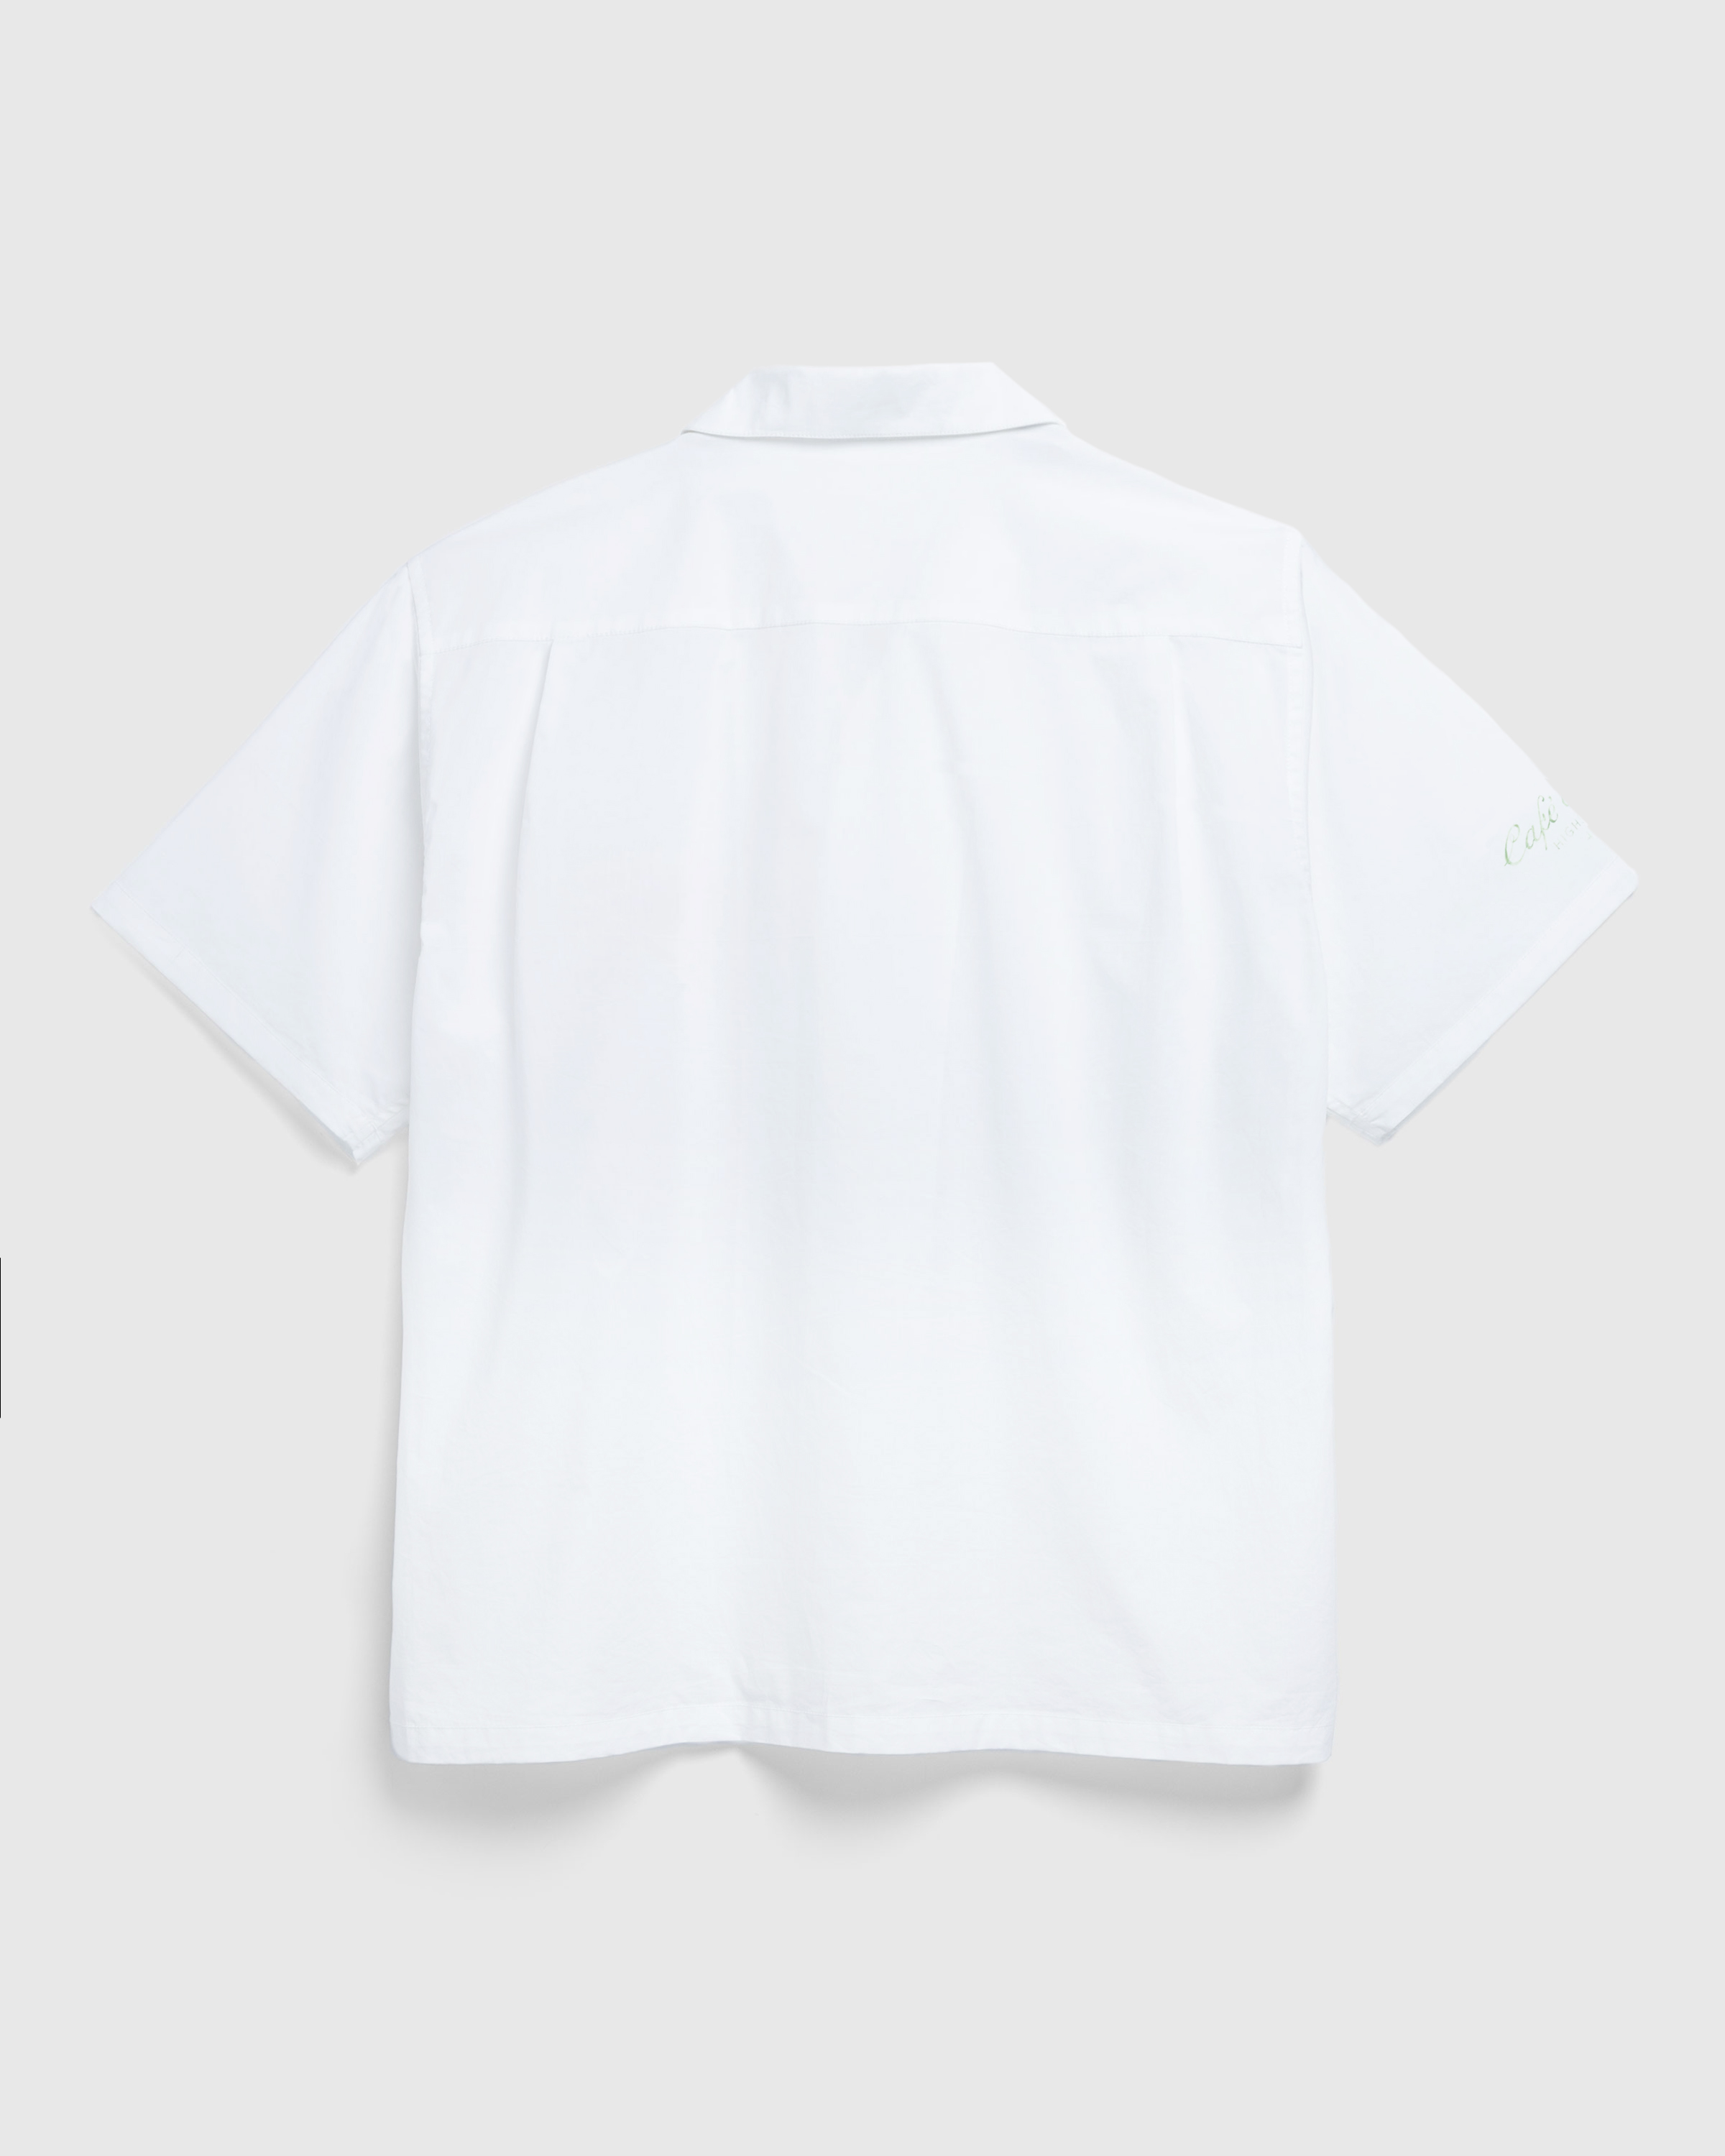 Café de Flore x Highsnobiety – Dessert Shirt White - Shortsleeve Shirts - White - Image 3